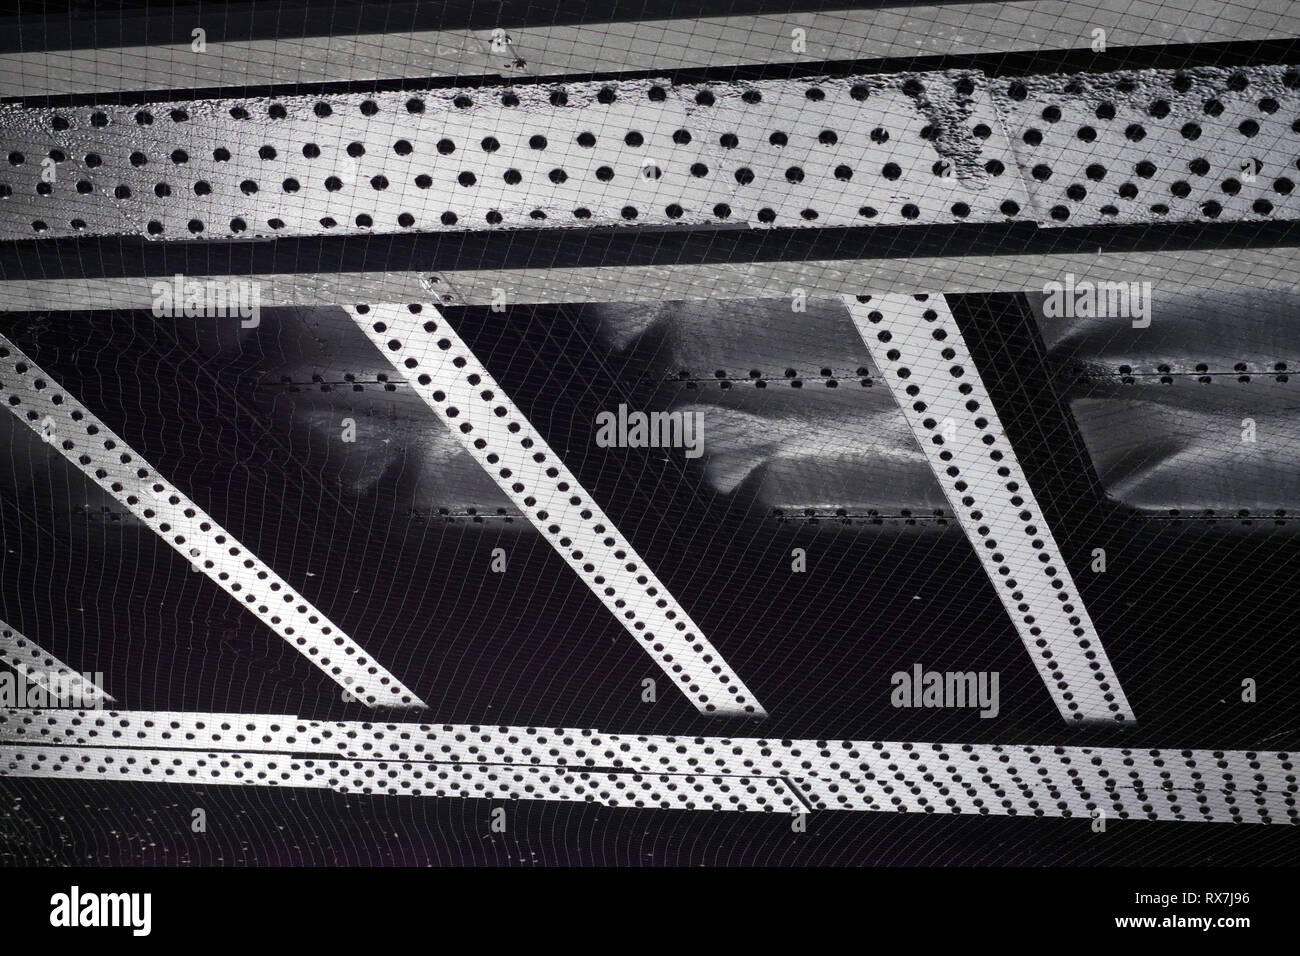 Underside of railway bridge showing riveted steel plates. Built to last. Fine mesh to stop pigeons. Stock Photo